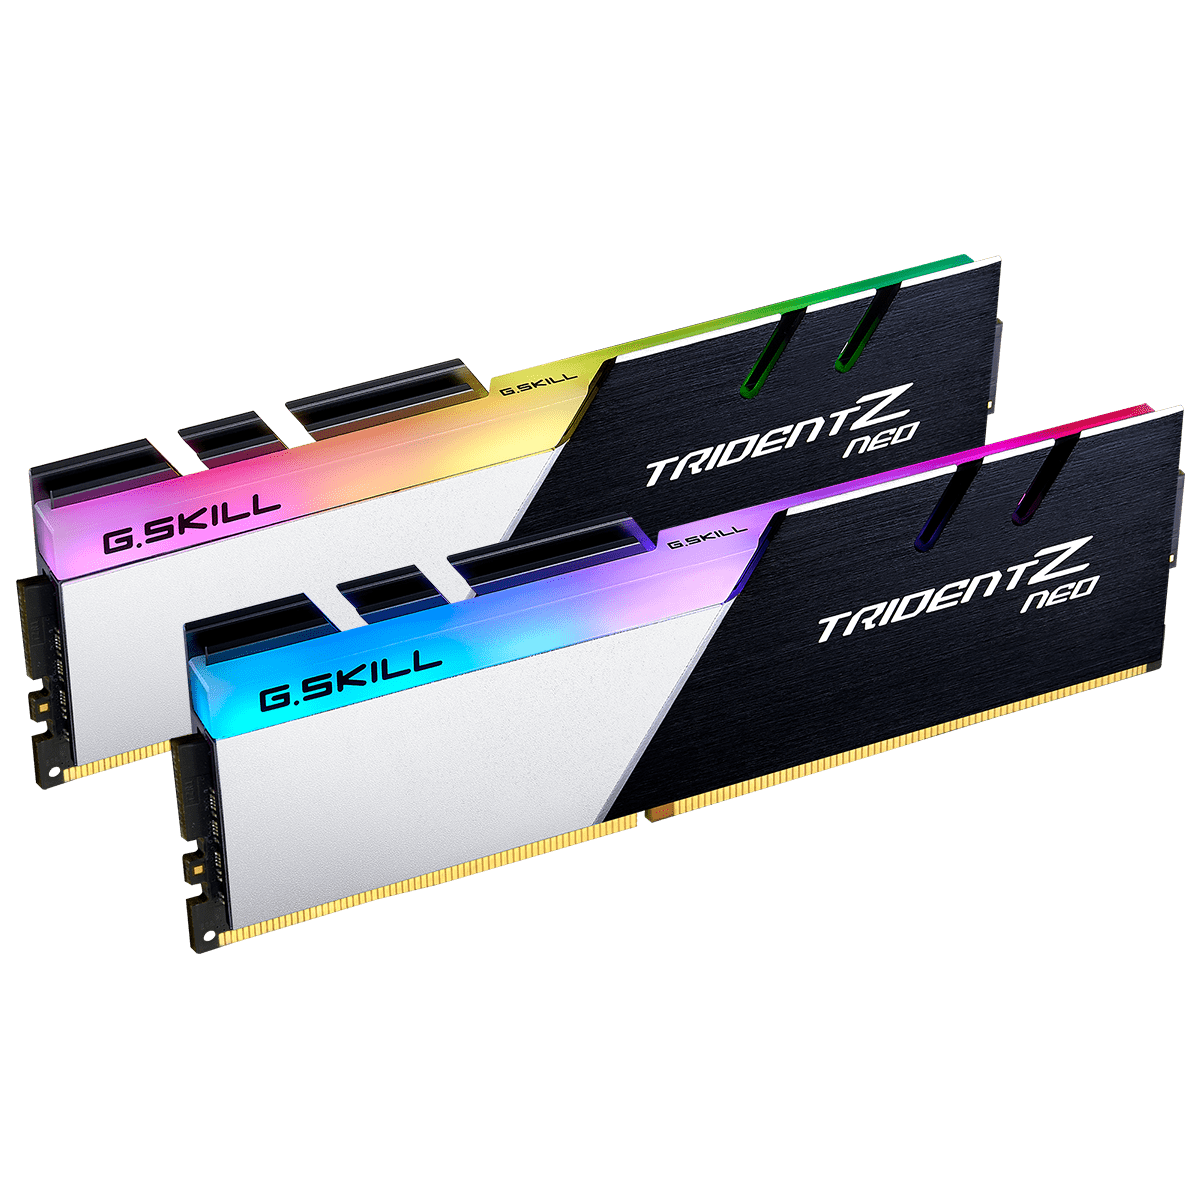 Памет G.SKILL Trident Z Neo RGB 32GB(2x16GB) DDR4 PC4-25600 3200MHz CL16 F4-3200C16D-32GTZN-4